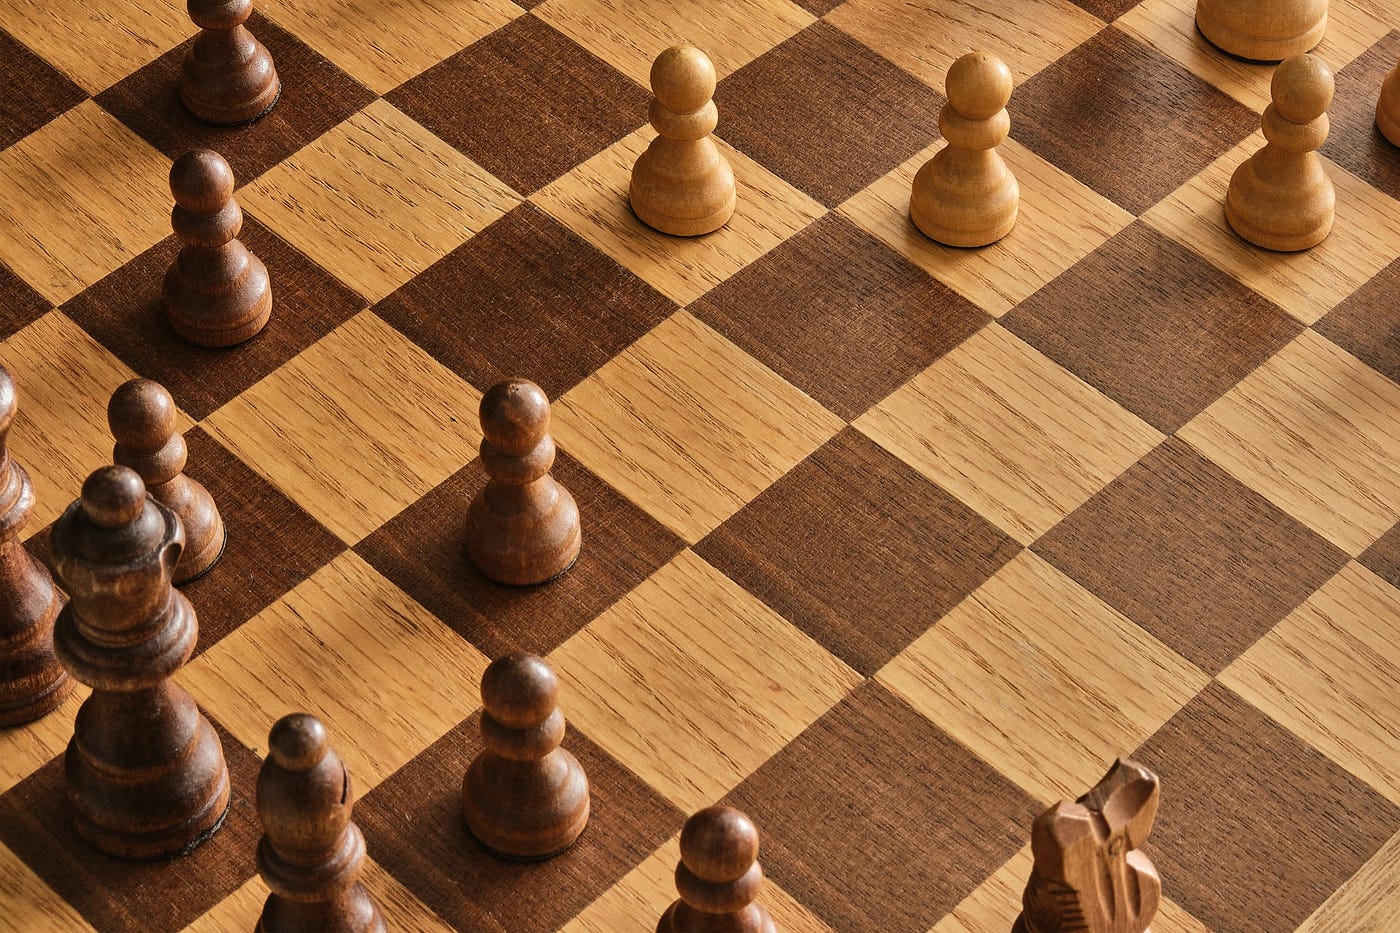 Create chess game